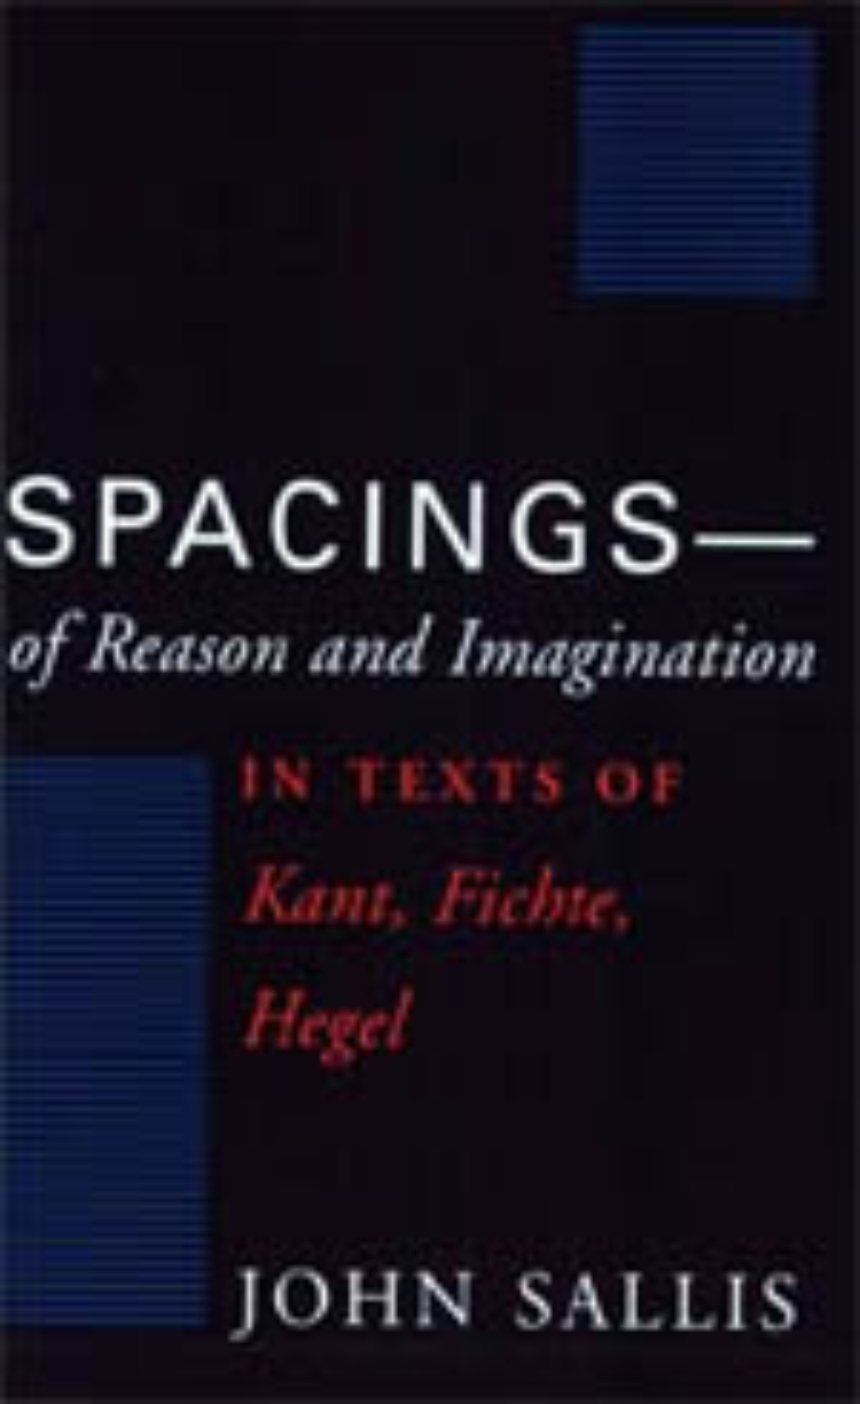 Spacings--of Reason and Imagination